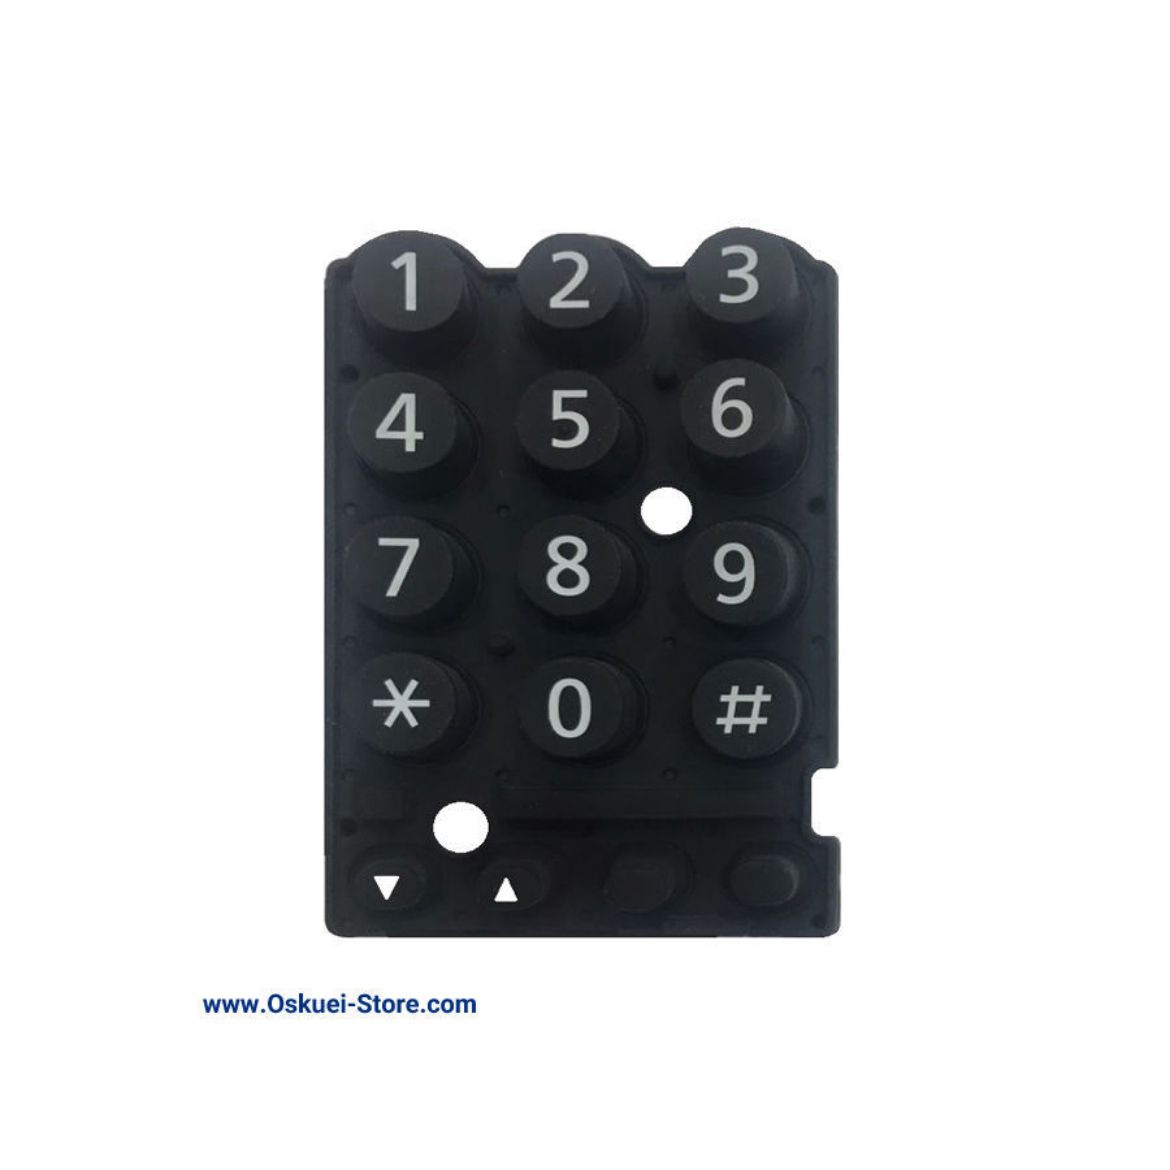 Panasonic Keypad For Panasonic KX-T7703 Model Numbers